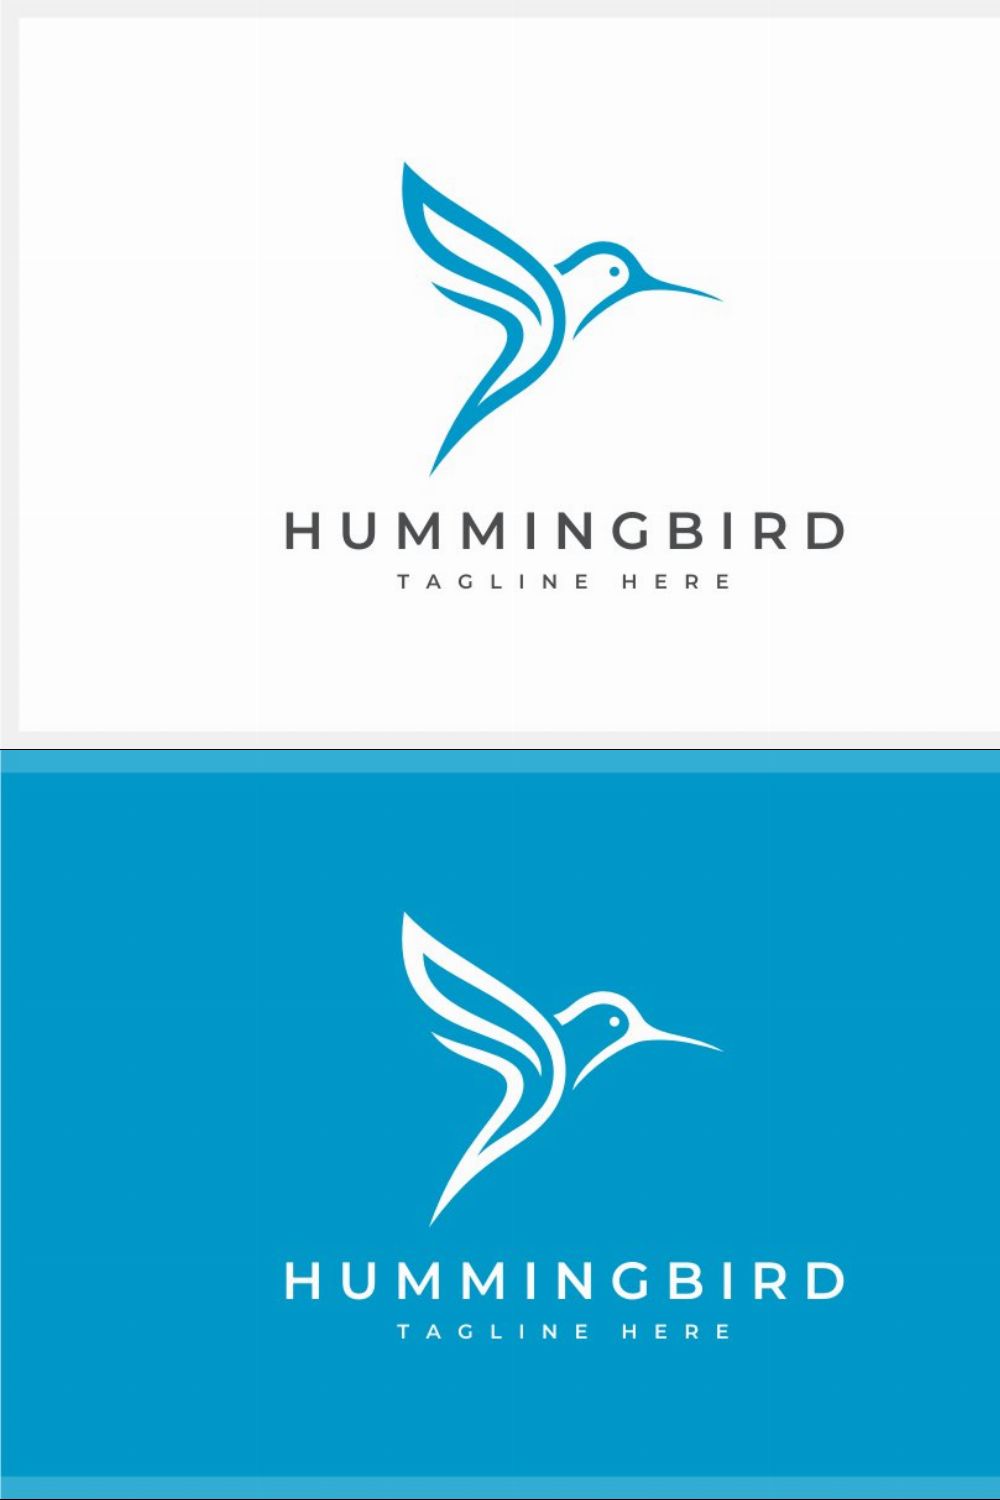 Hummingbird Logo pinterest preview image.